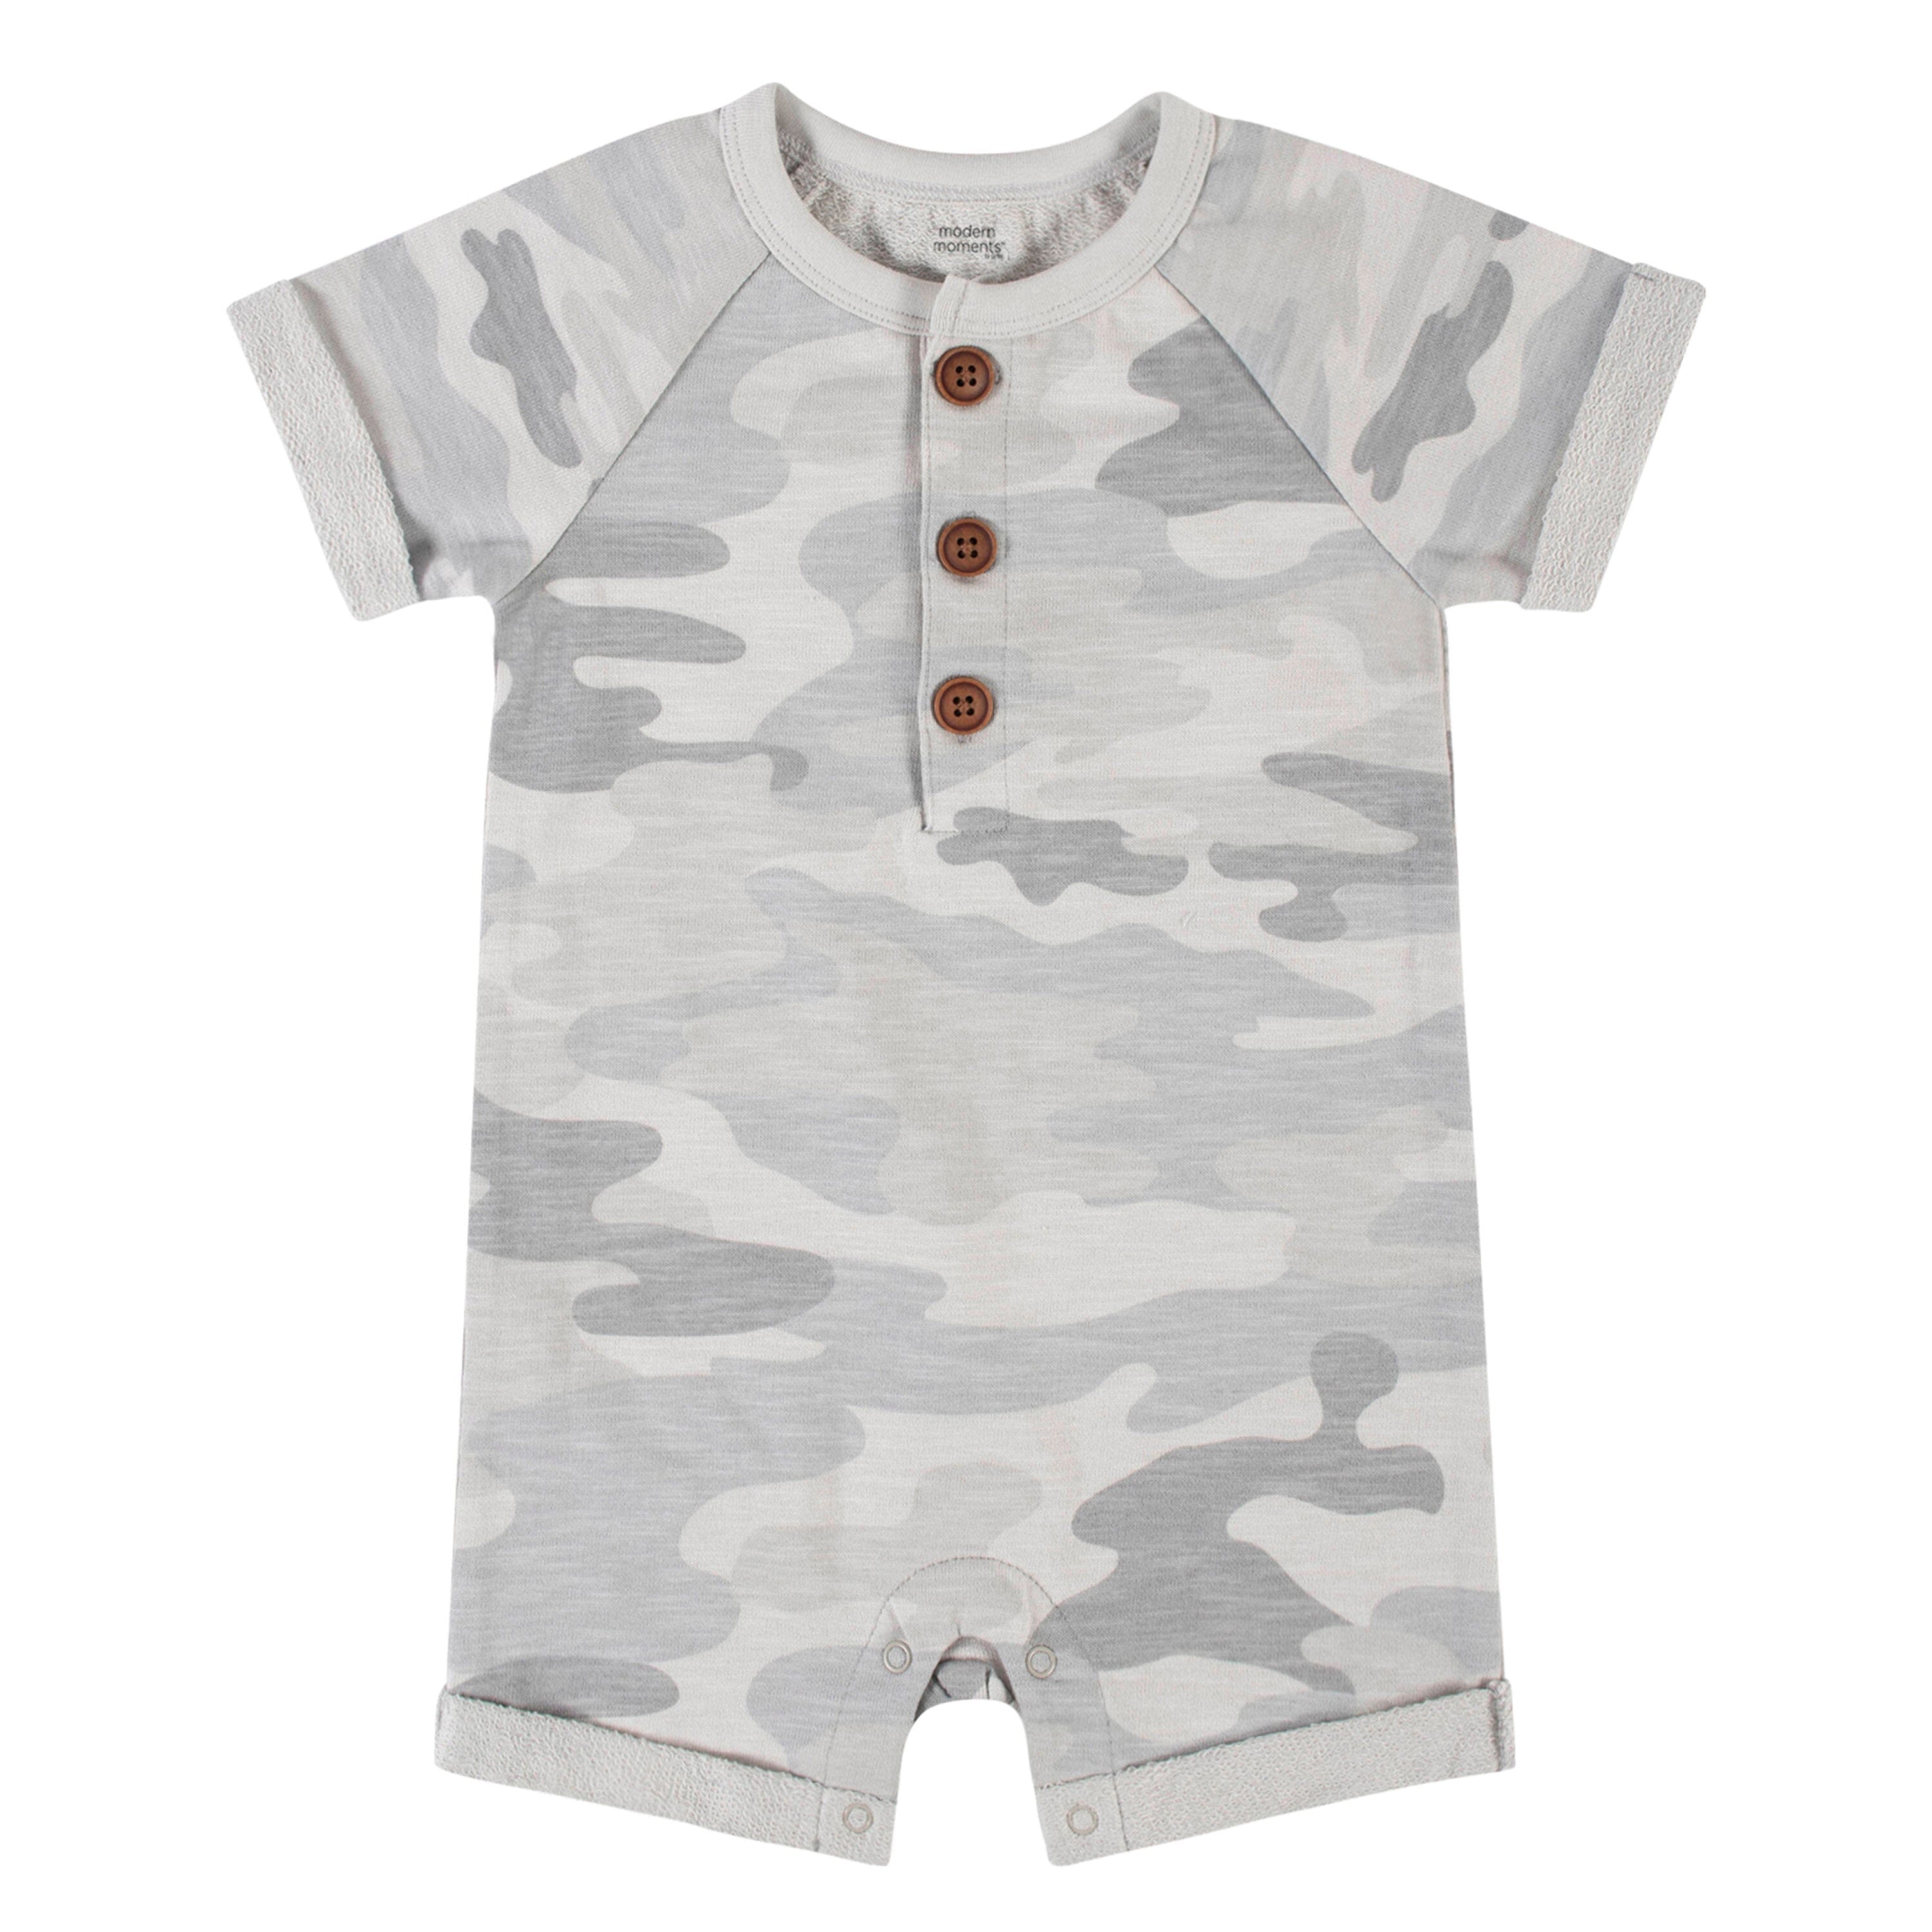 Baby Boy 95% Cotton Short-sleeve Graphic Grey Romper